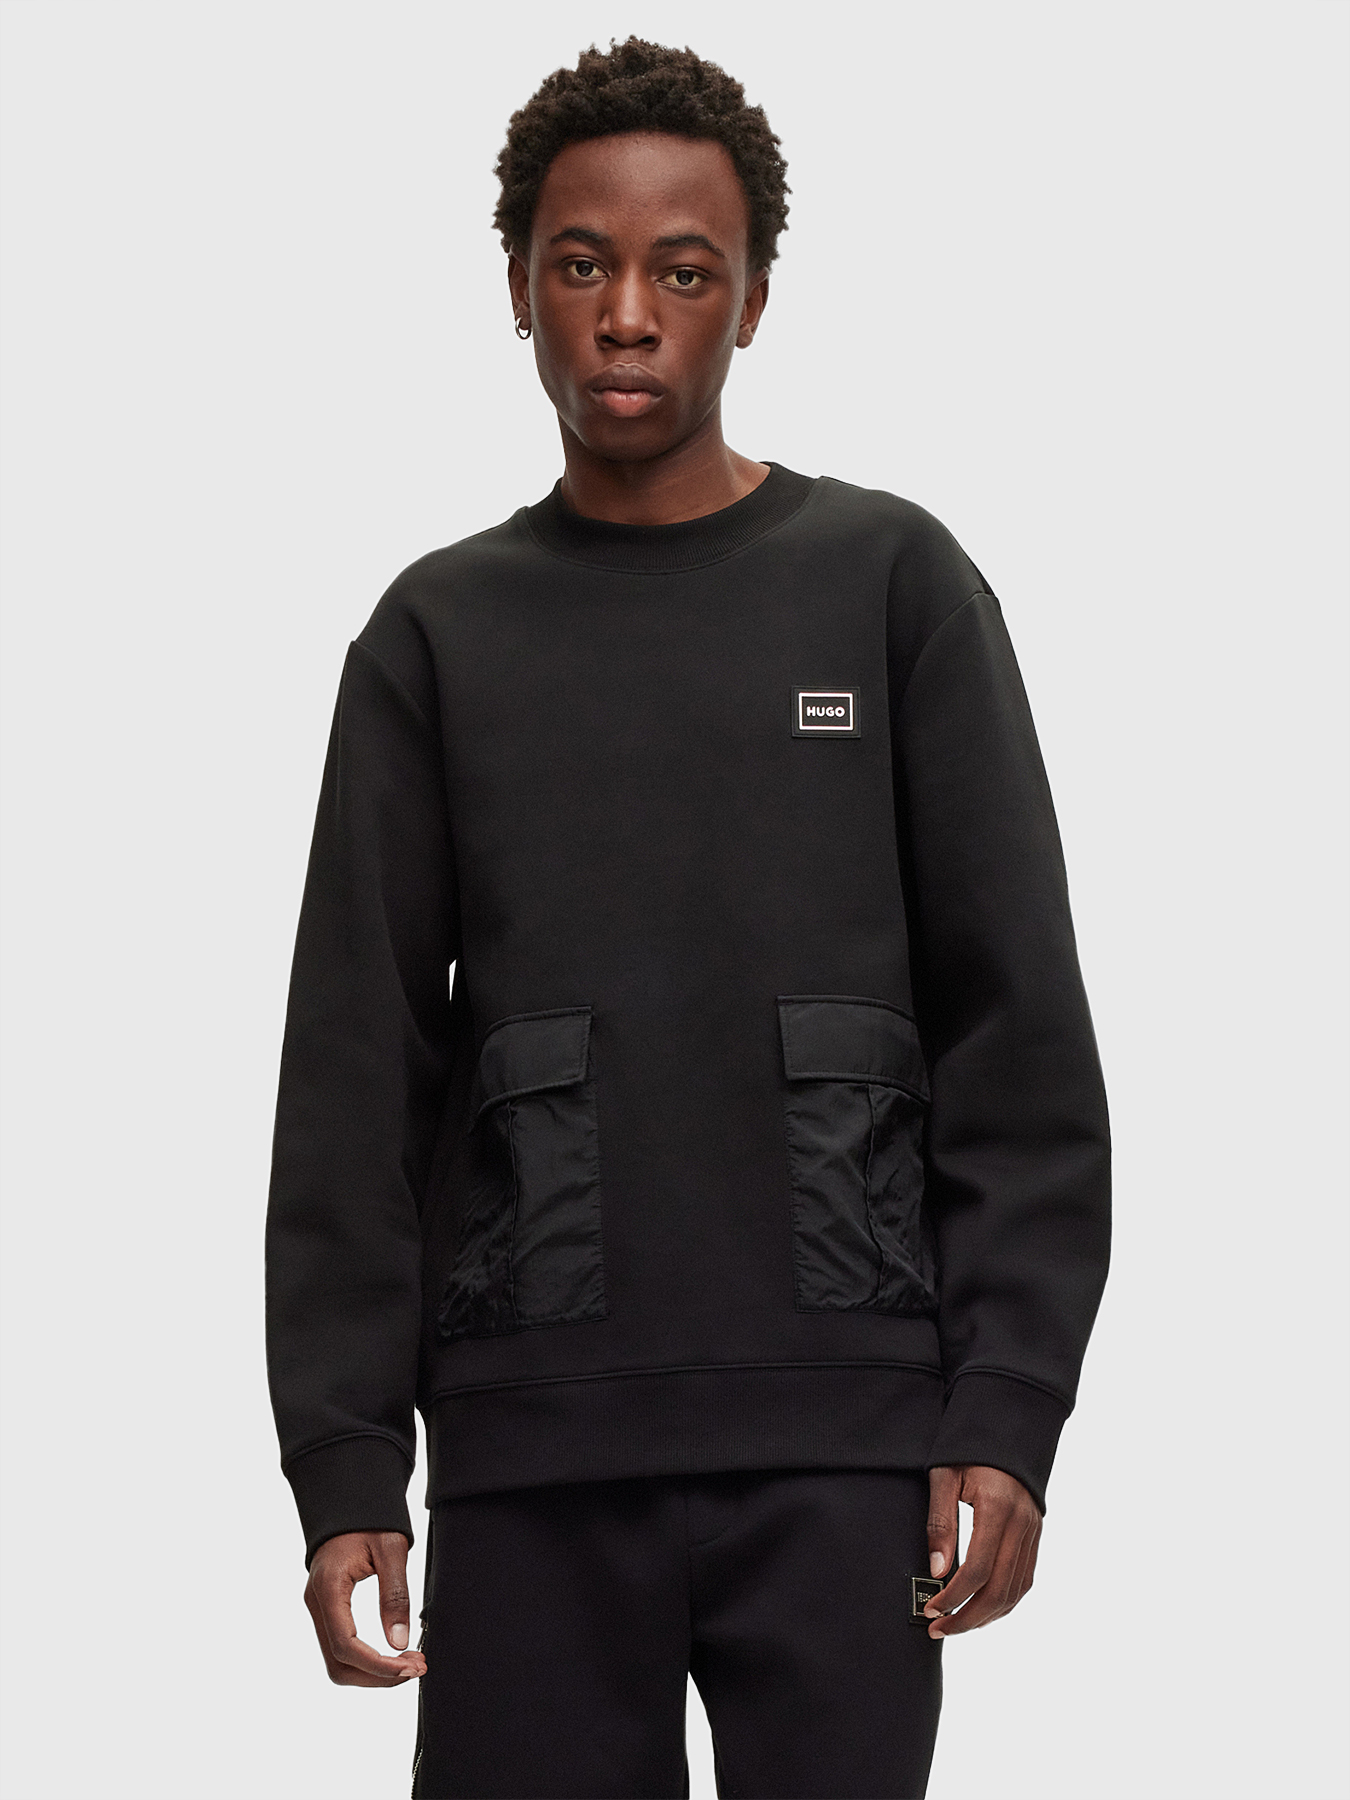 Black sweatshirt with accent pockets brand HUGO